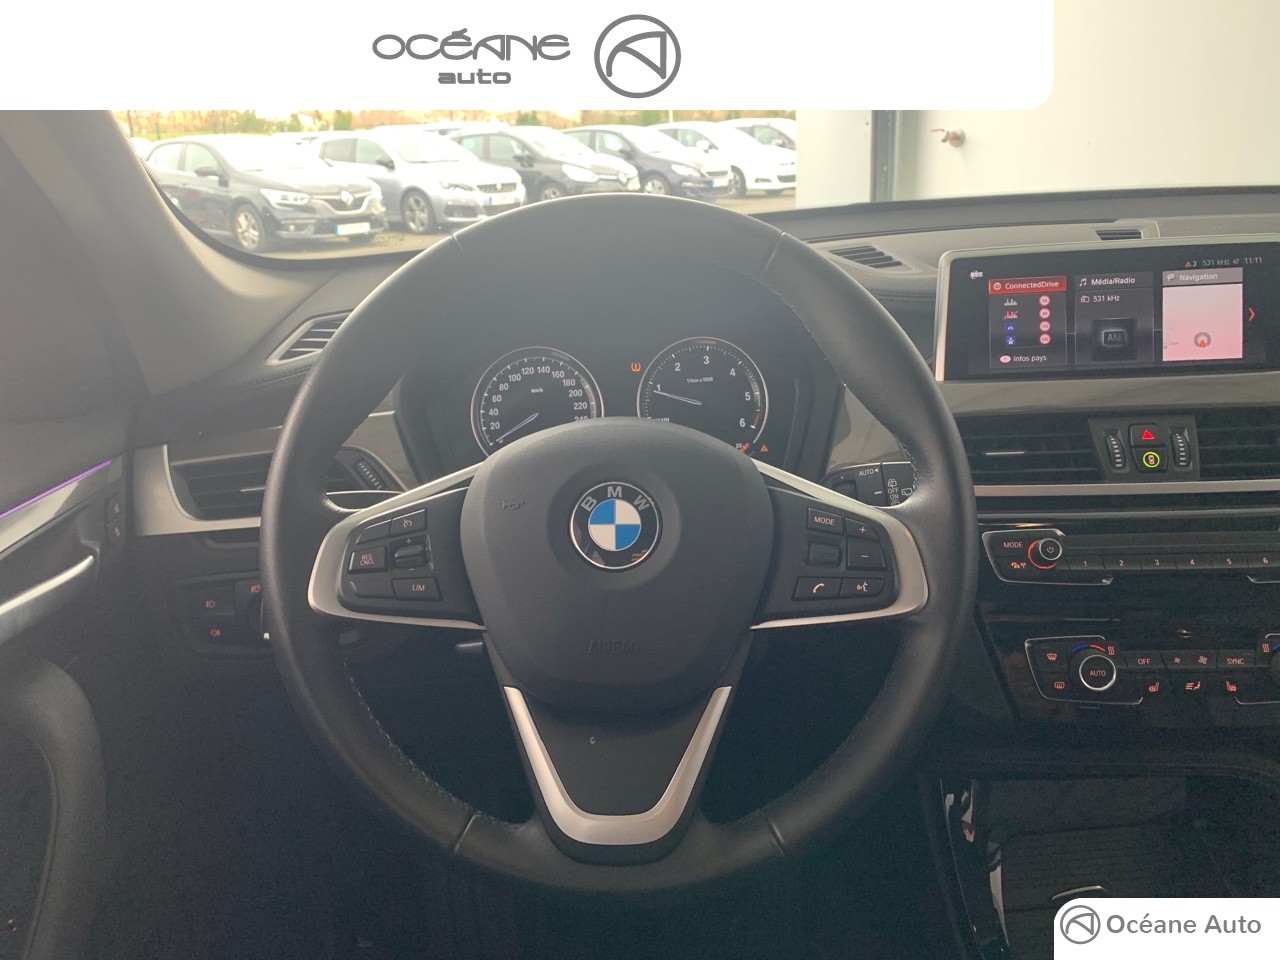 BMW X1 sDrive 18d 150 ch BVA8 xLine - Véhicule Occasion Océane Auto